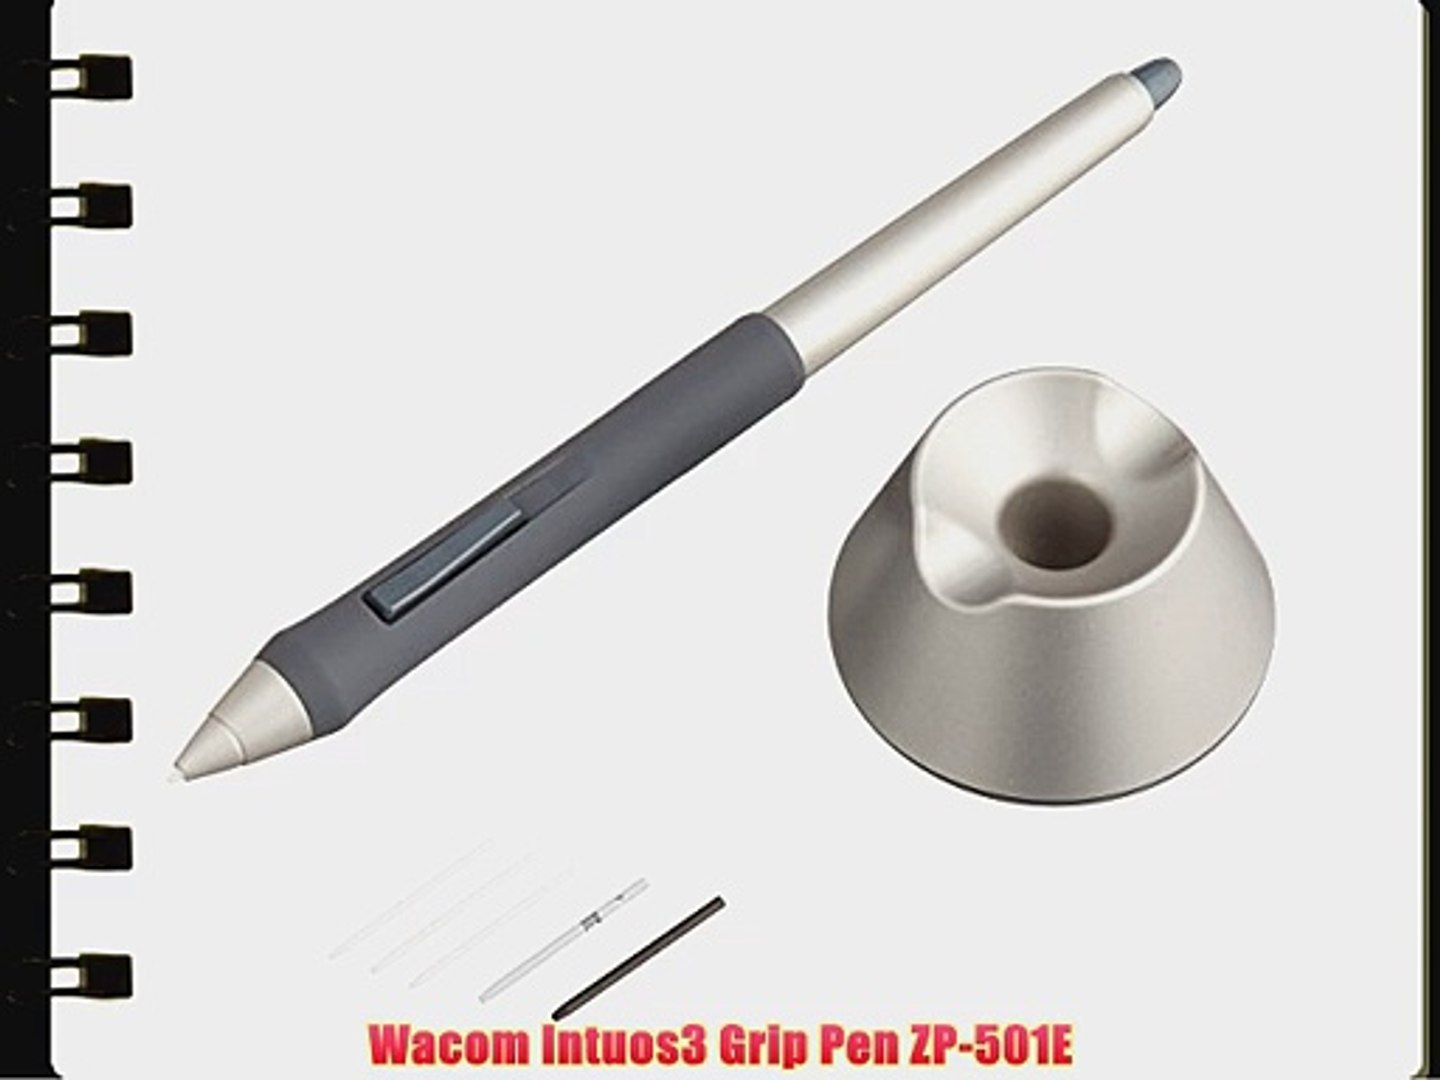 Wacom Intuos3 Grip Pen ZP-501E - video Dailymotion